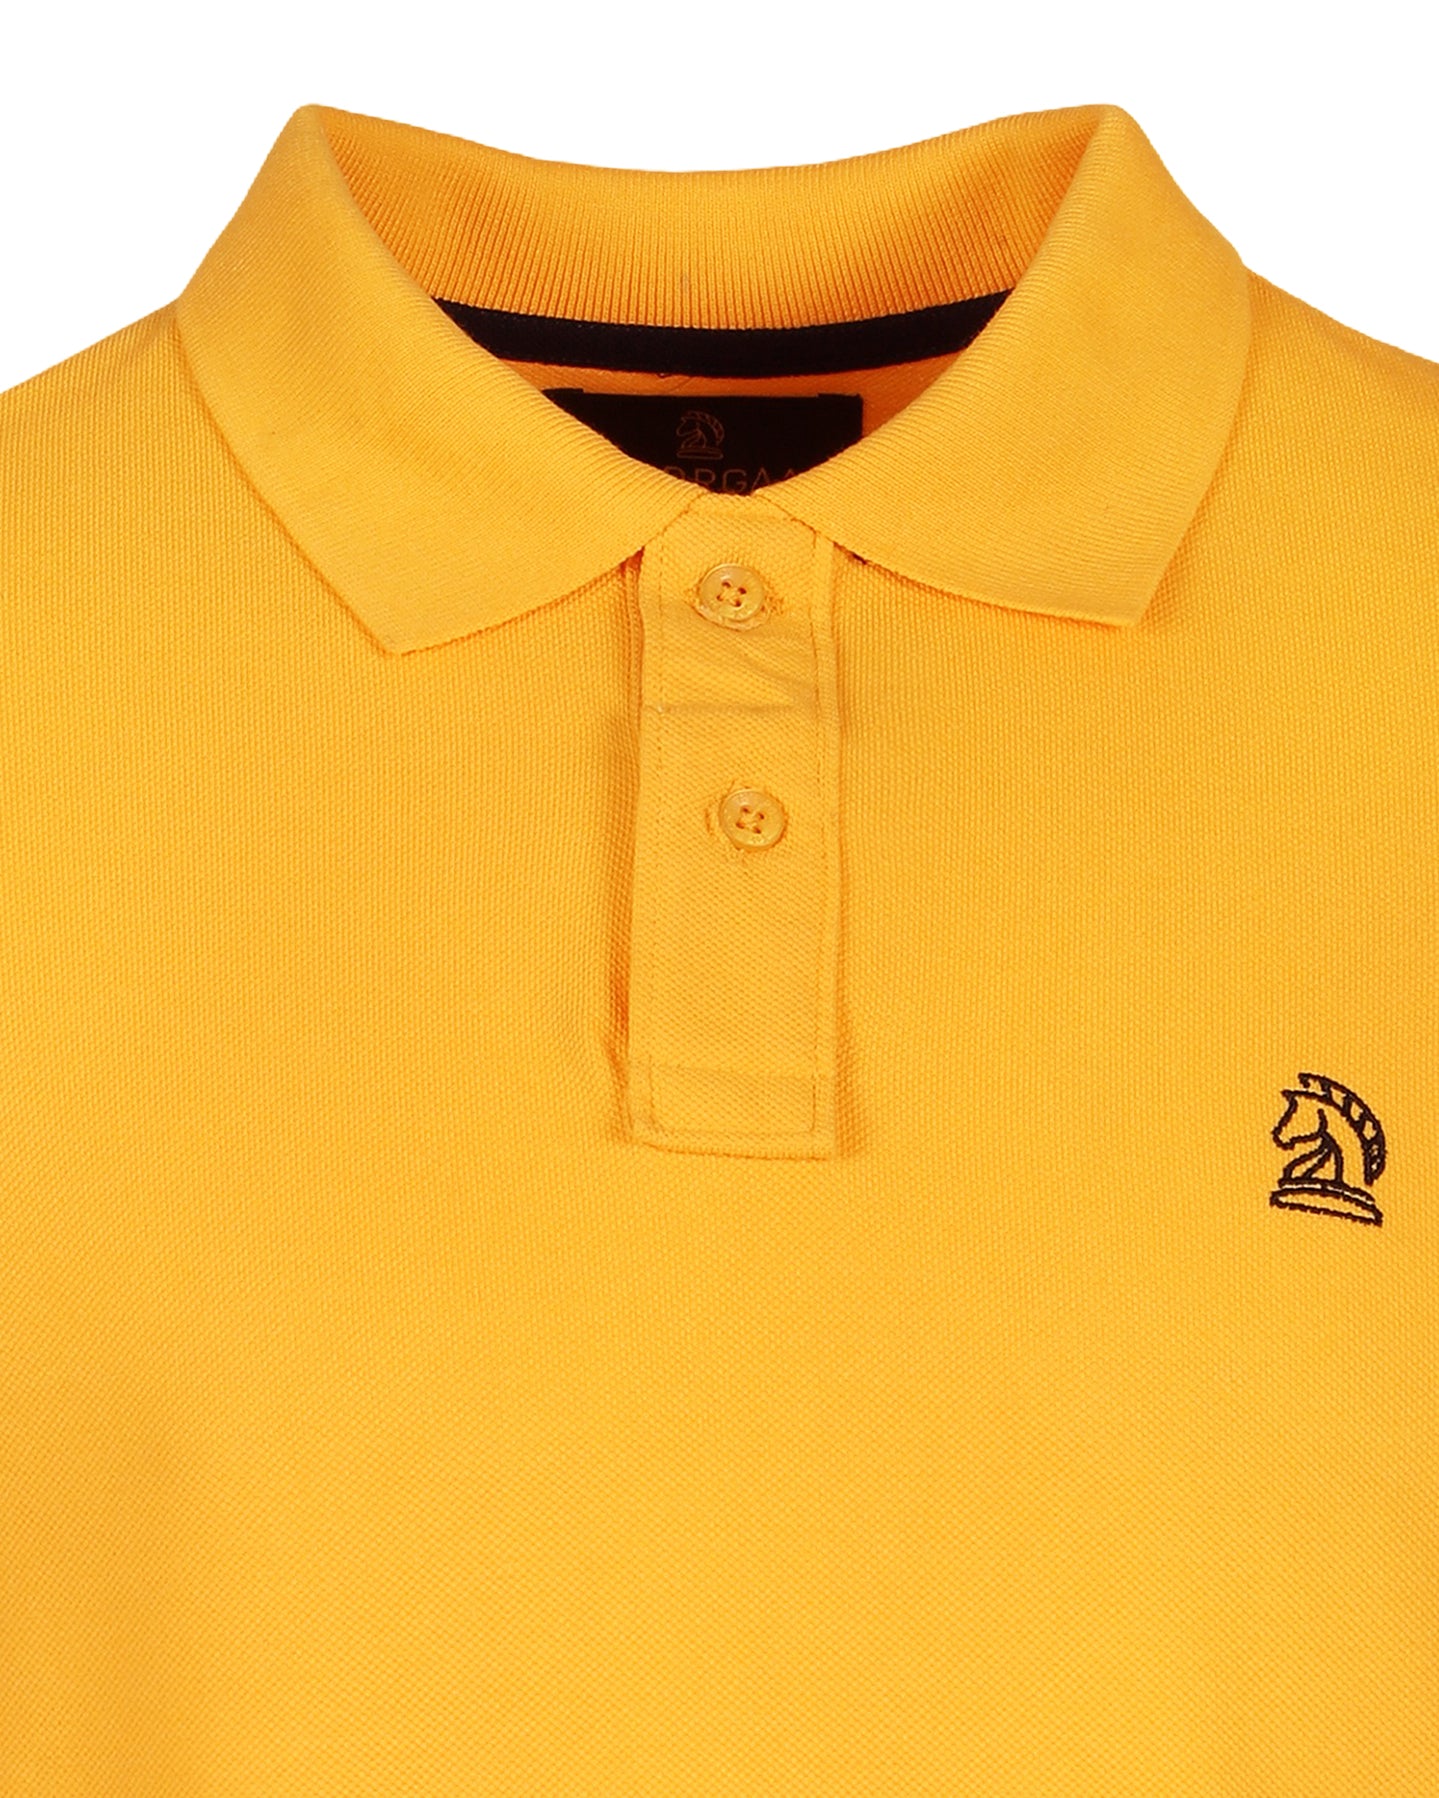 Gold Yellowish Color Premium Cotton T-Shirt